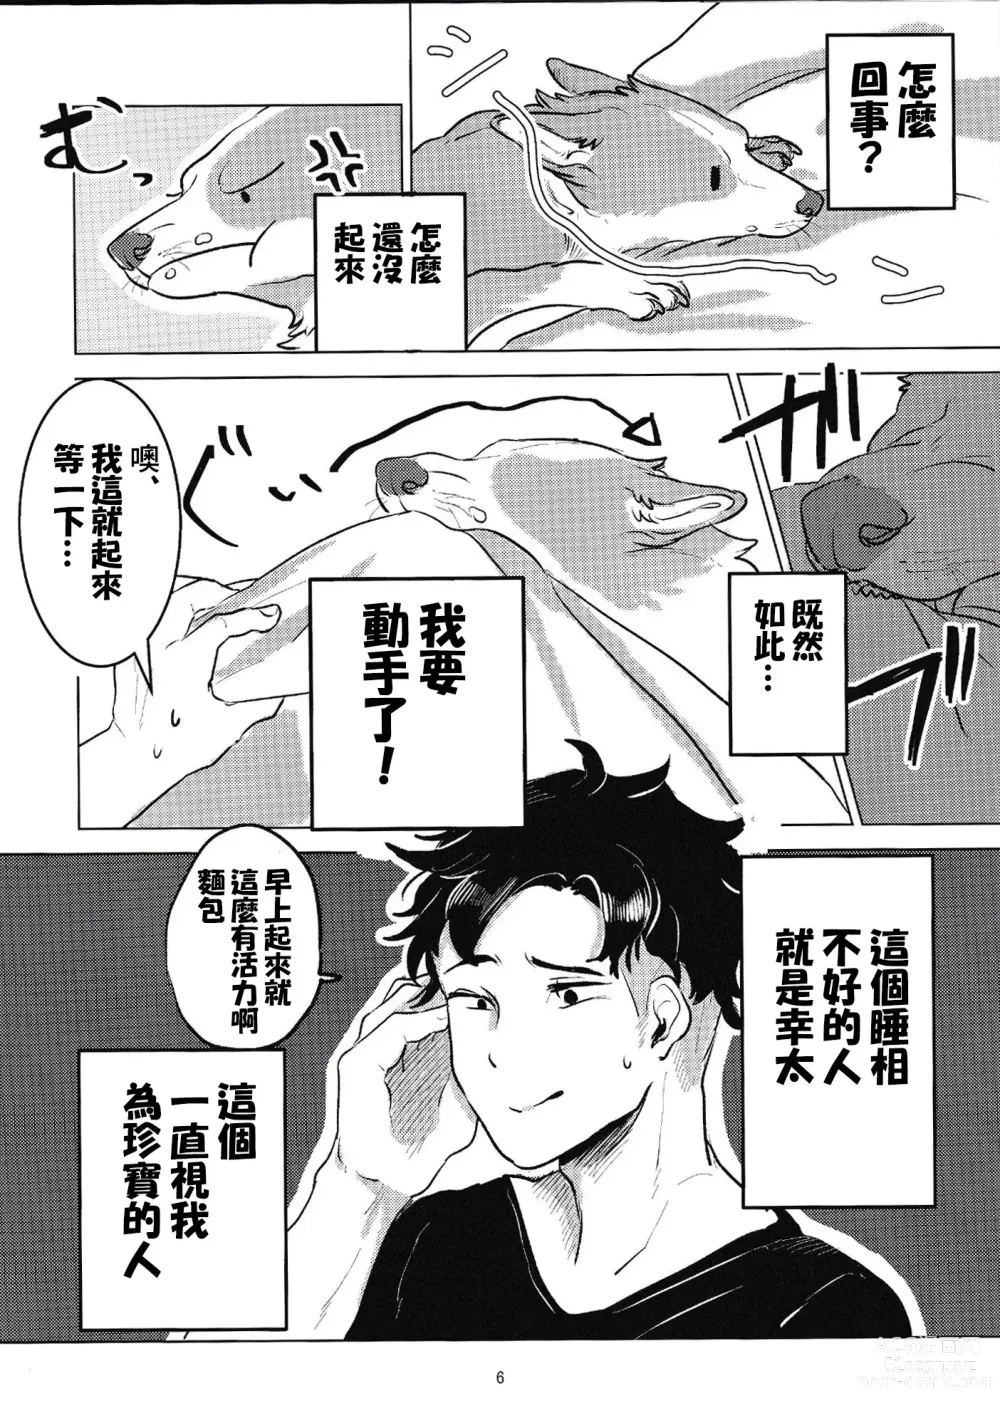 Page 5 of doujinshi 魅惑のパン